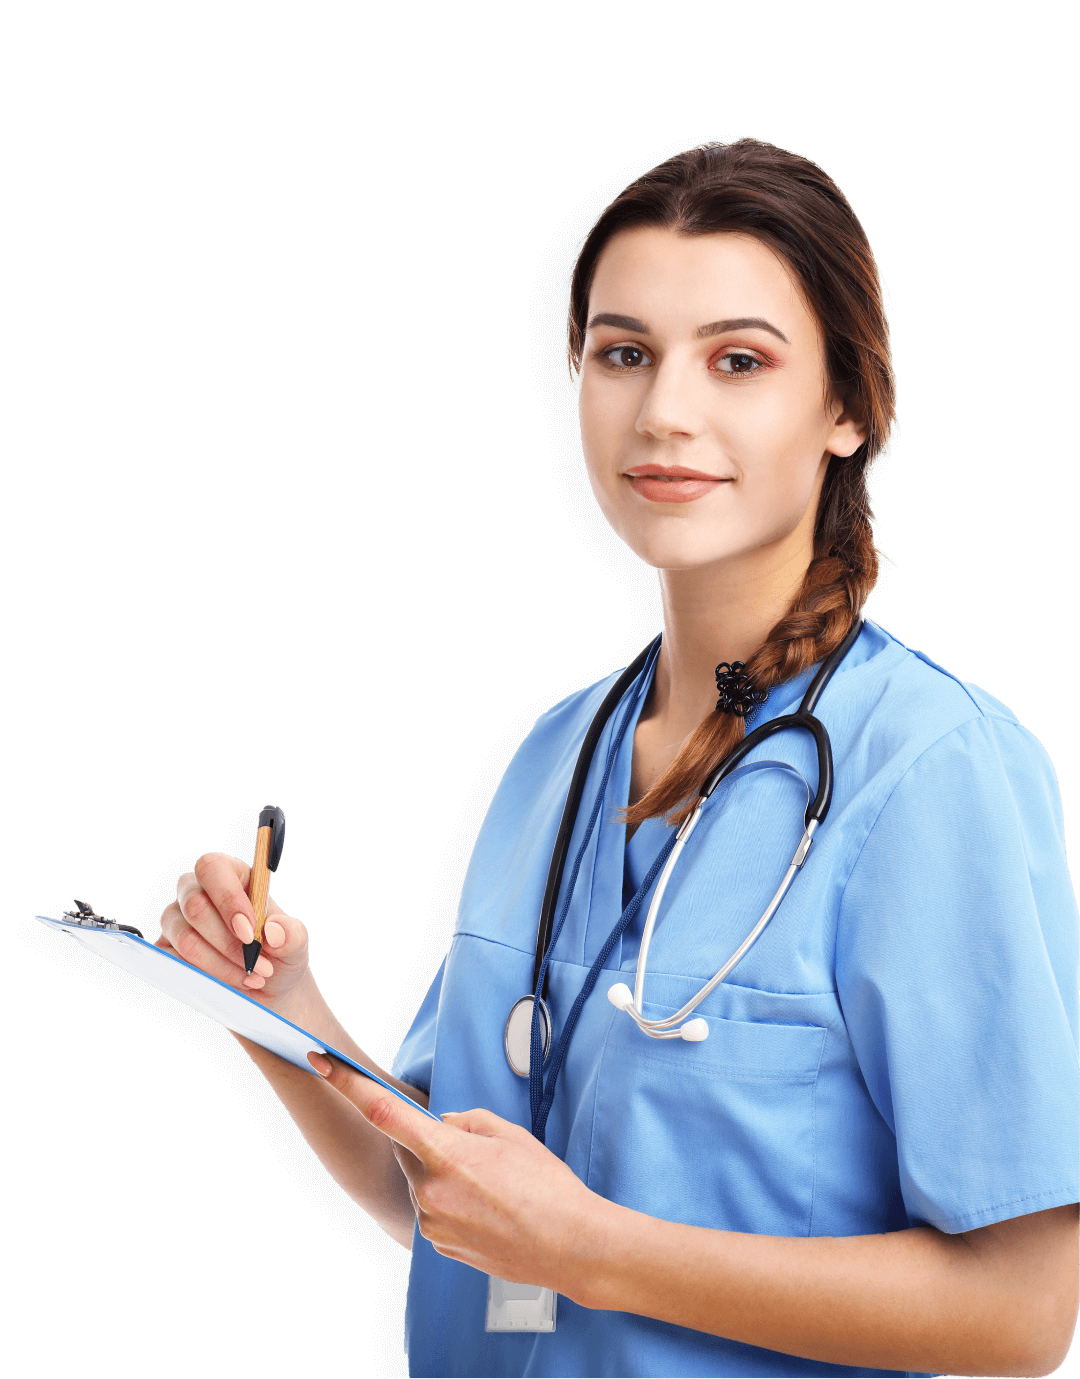 Nurse-Healthcare Quality professional